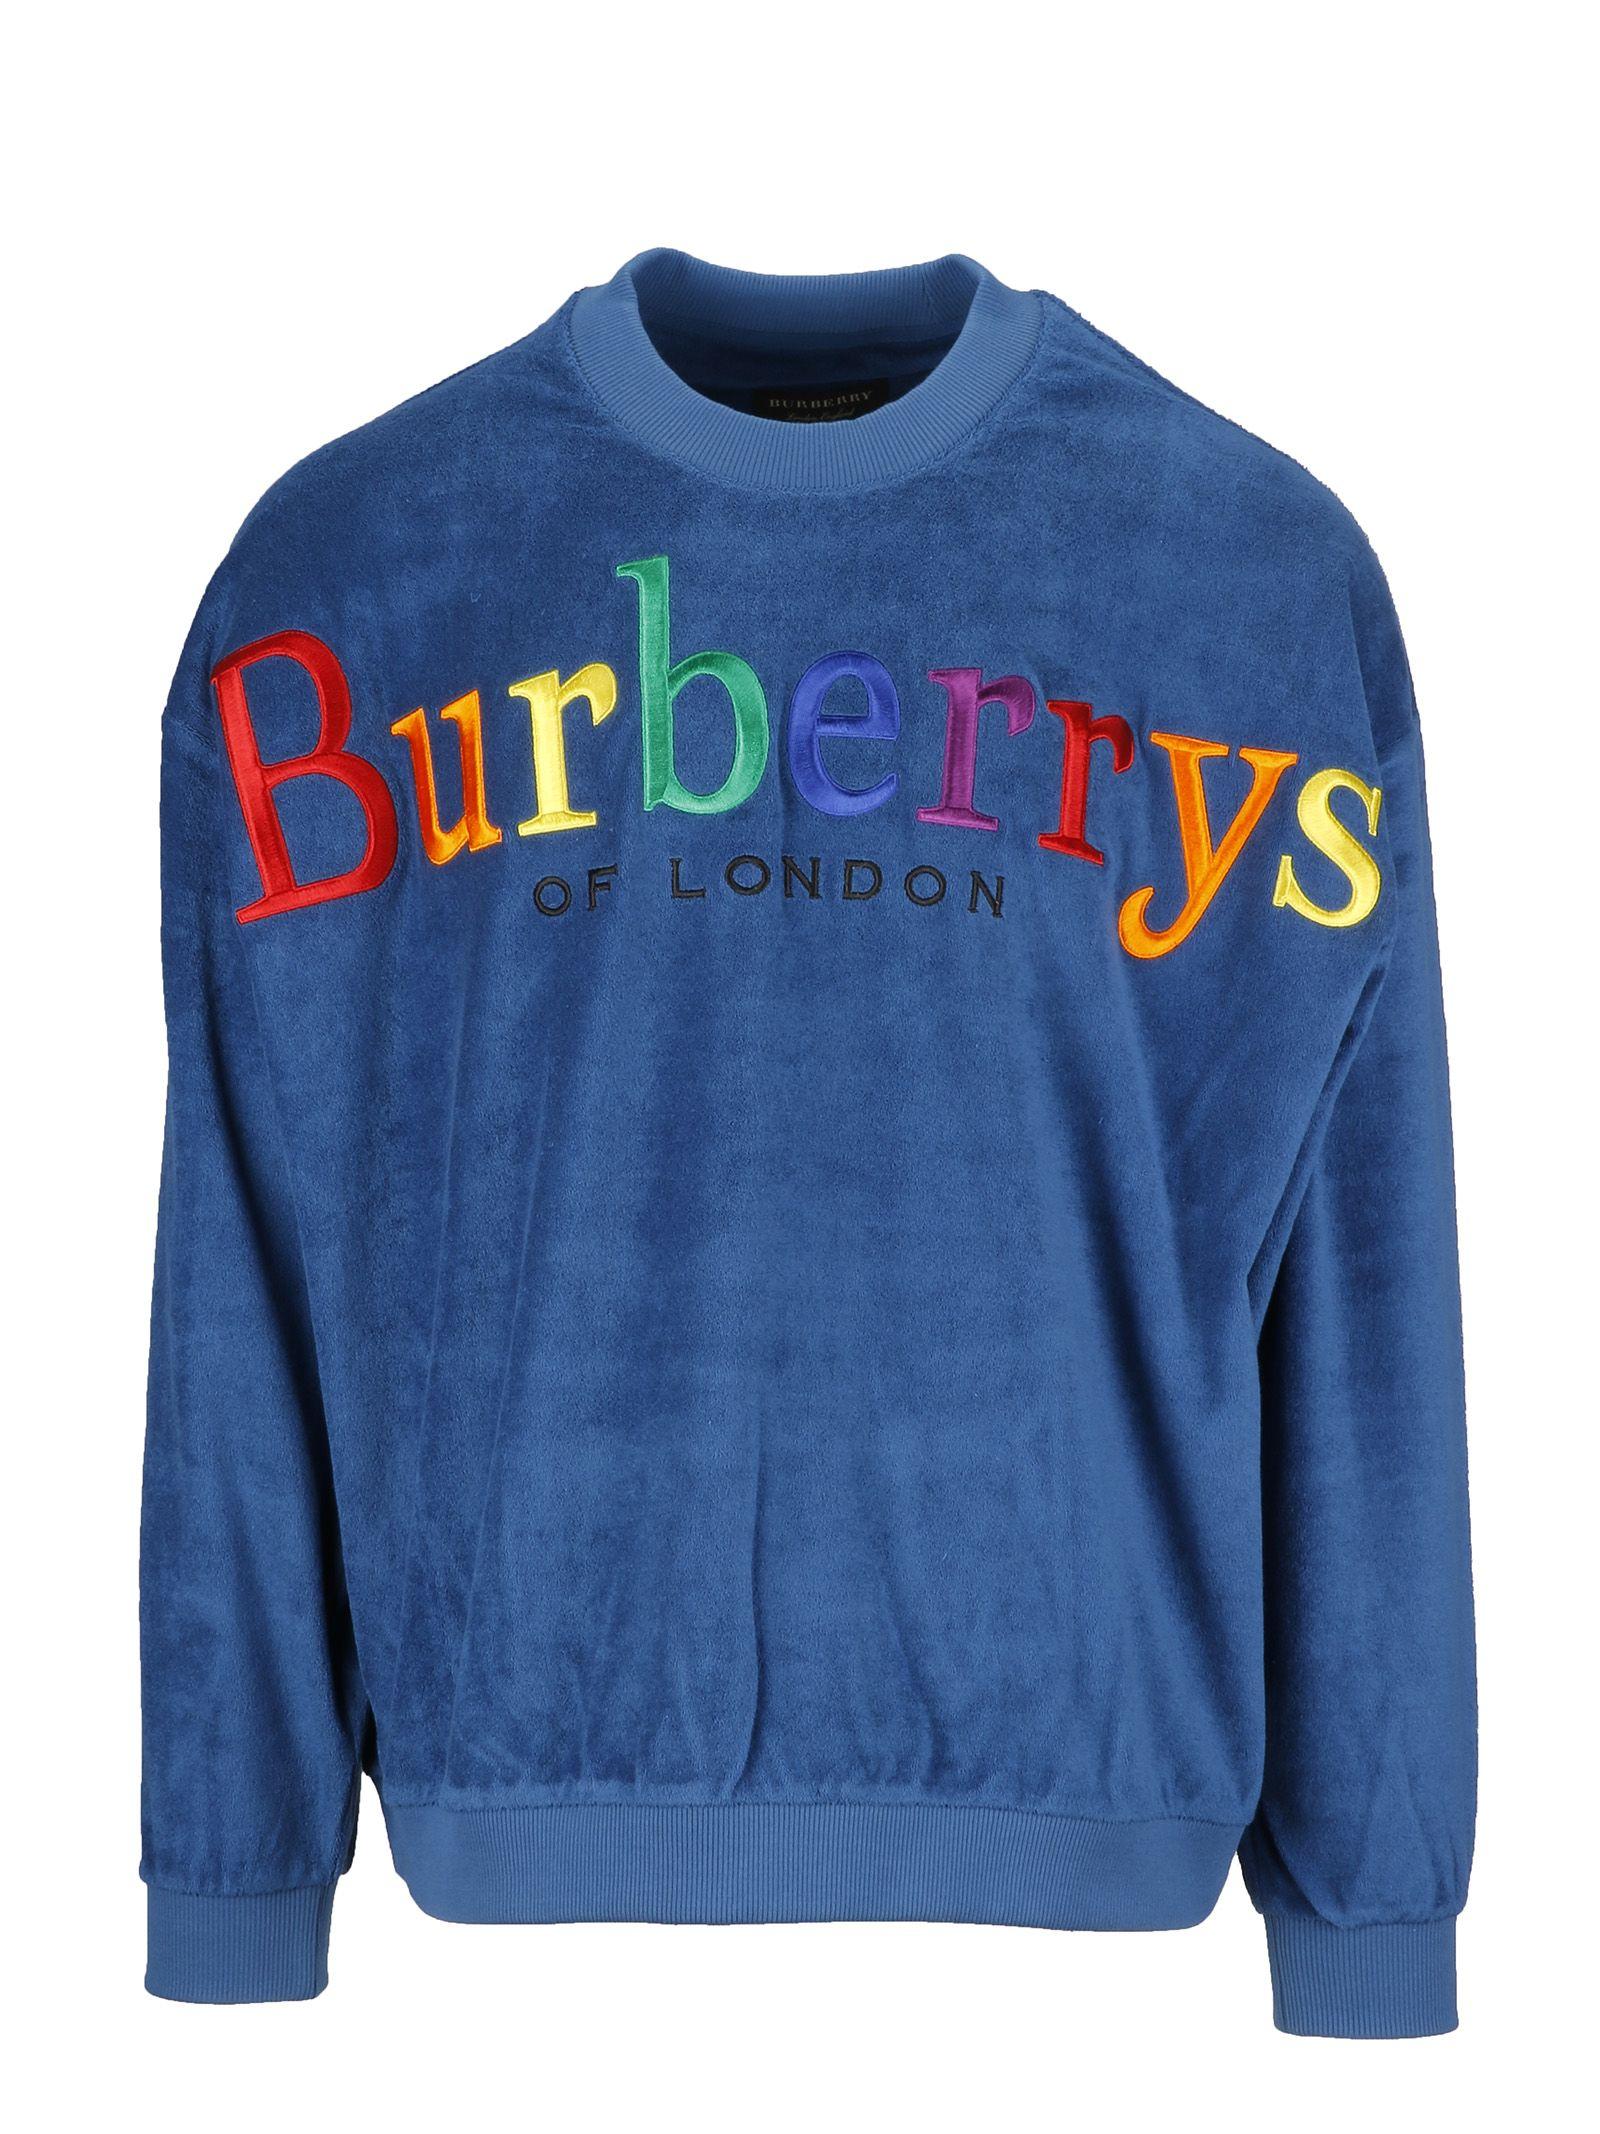 blue burberry sweater